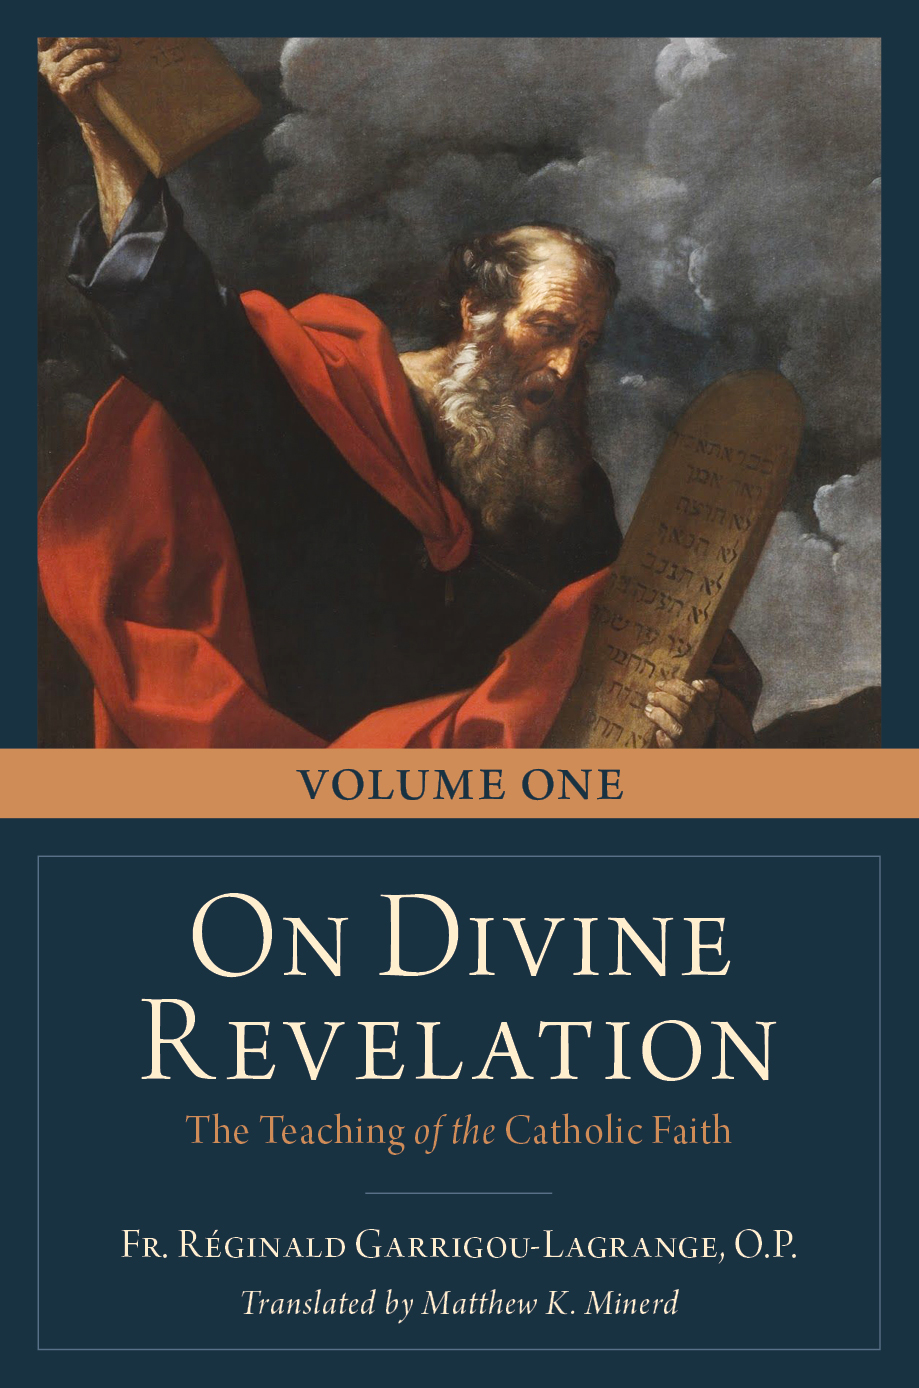 One　Paul　Faith　St.　Divine　On　the　Teaching　–　Vol.　Revelation:　Catholic　of　The　Center